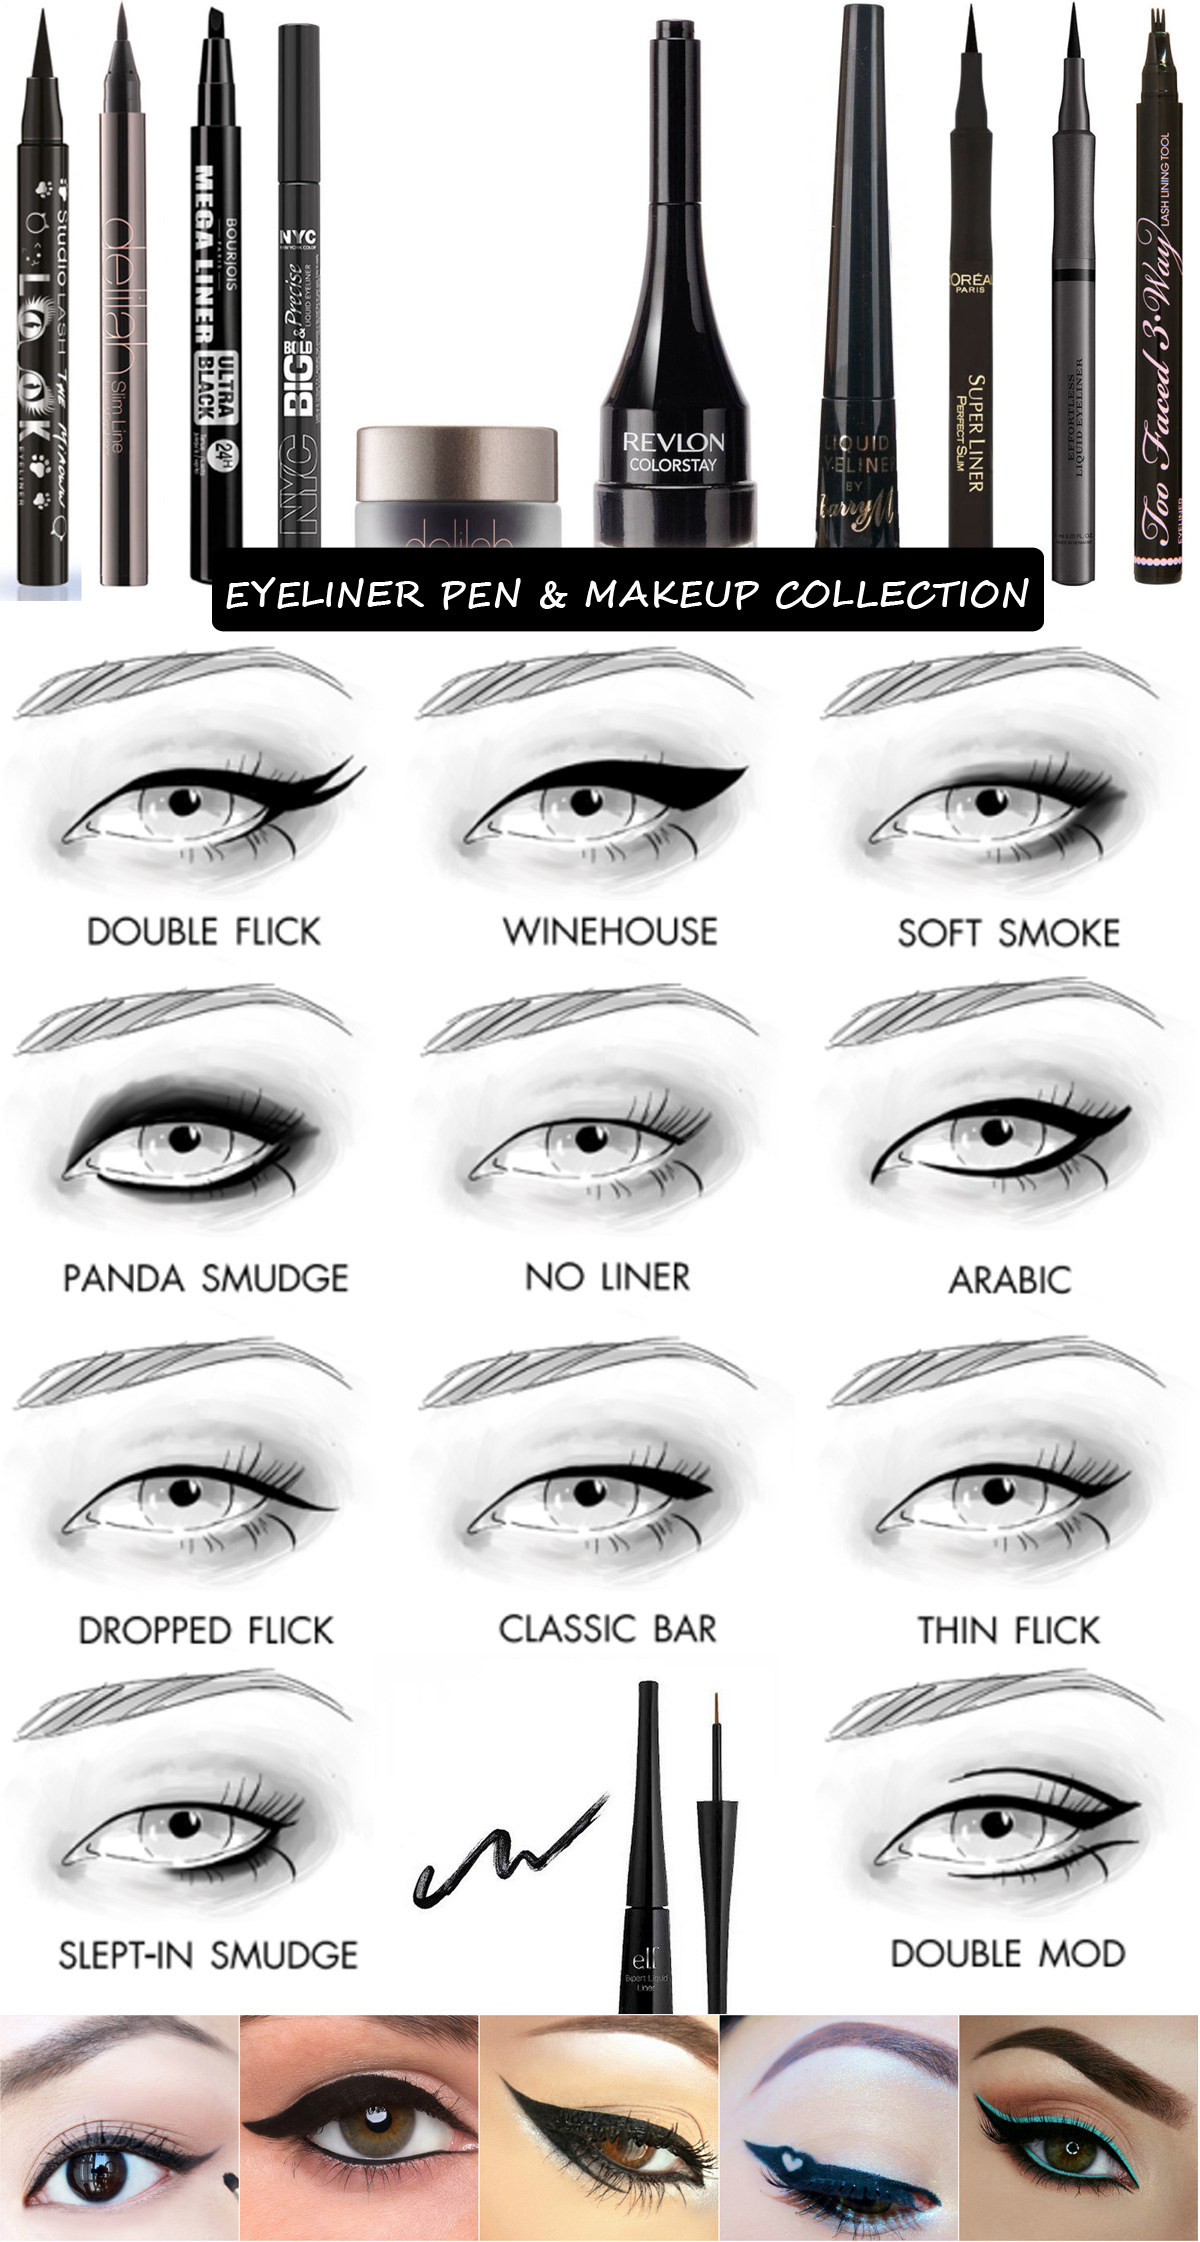 eye-liner